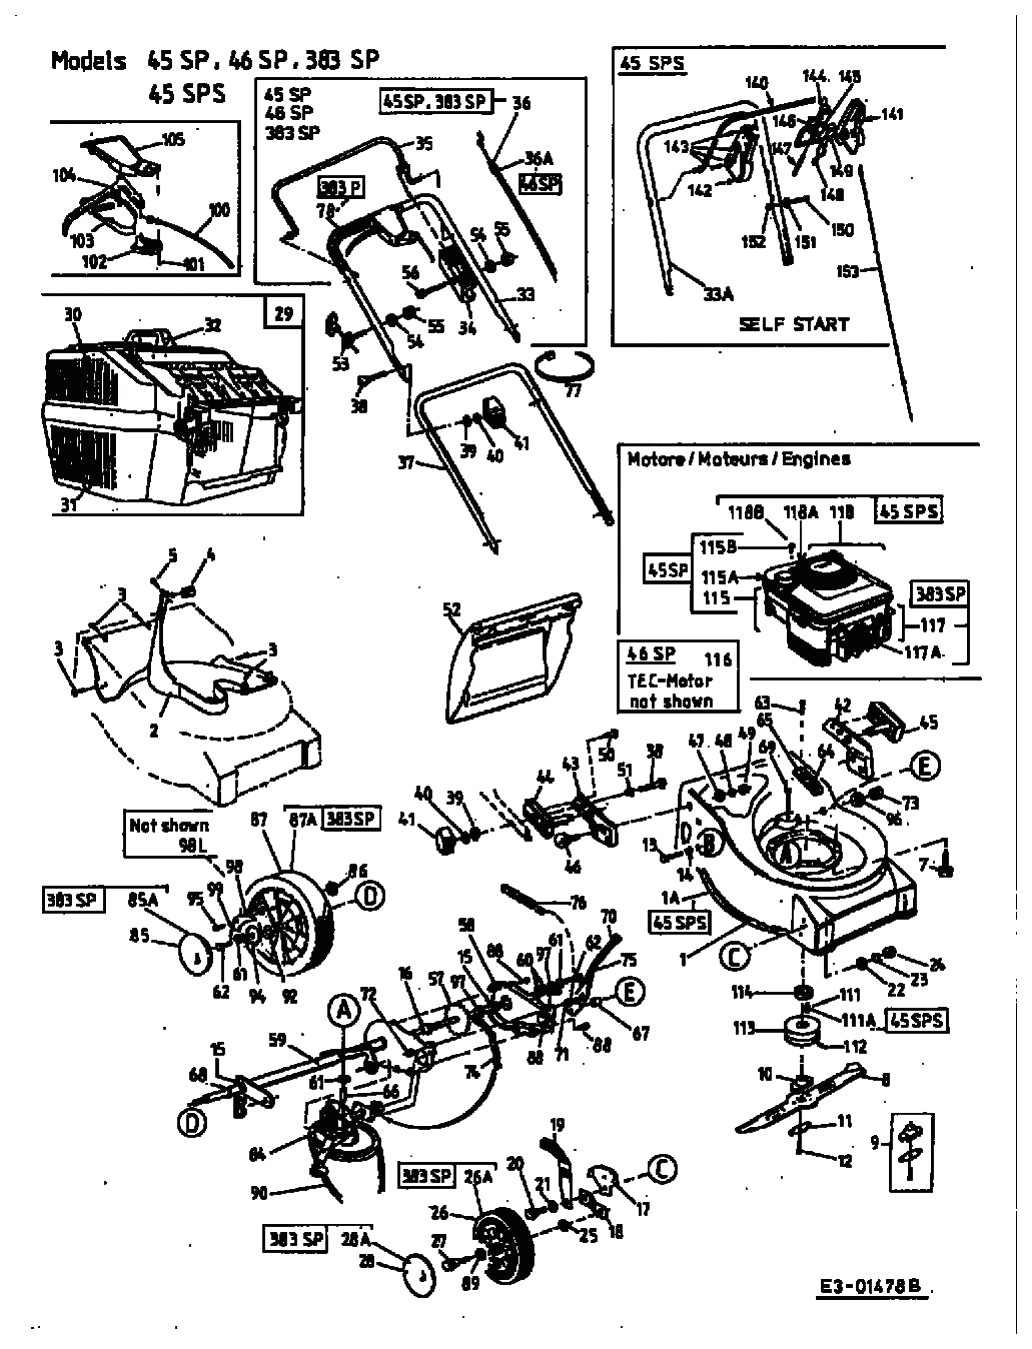 MTD Артикул 12C-604A678 (год выпуска 2002). Основная деталировка